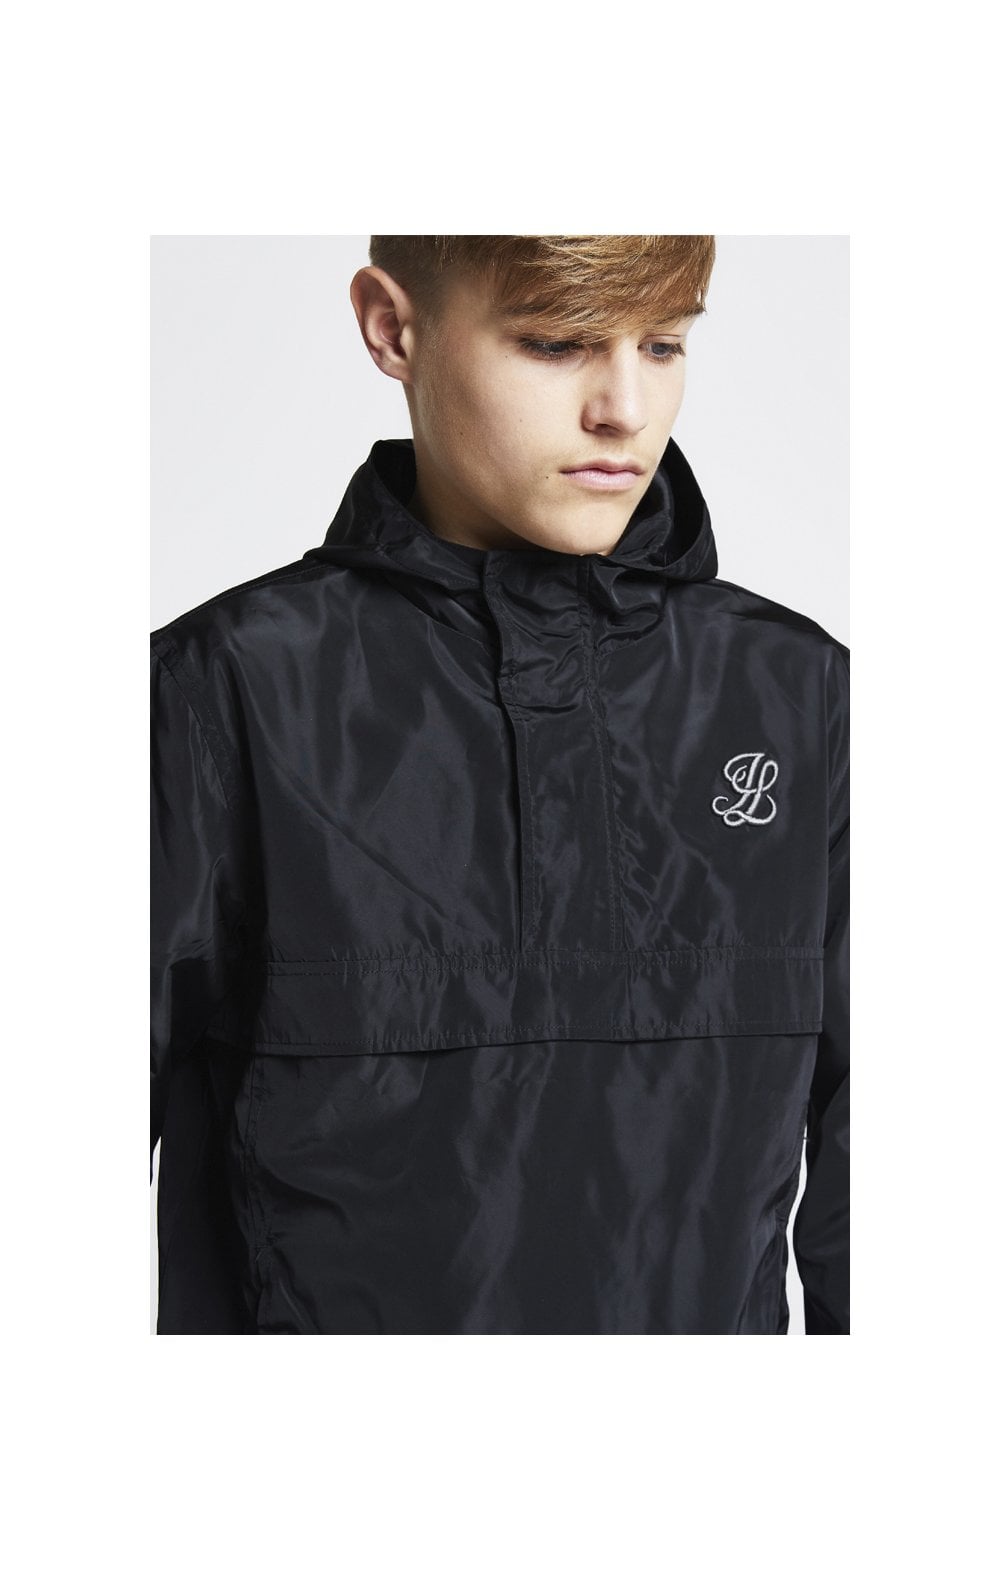 Illusive London Lightweight 1/4 Zip Jacket – Black (1)